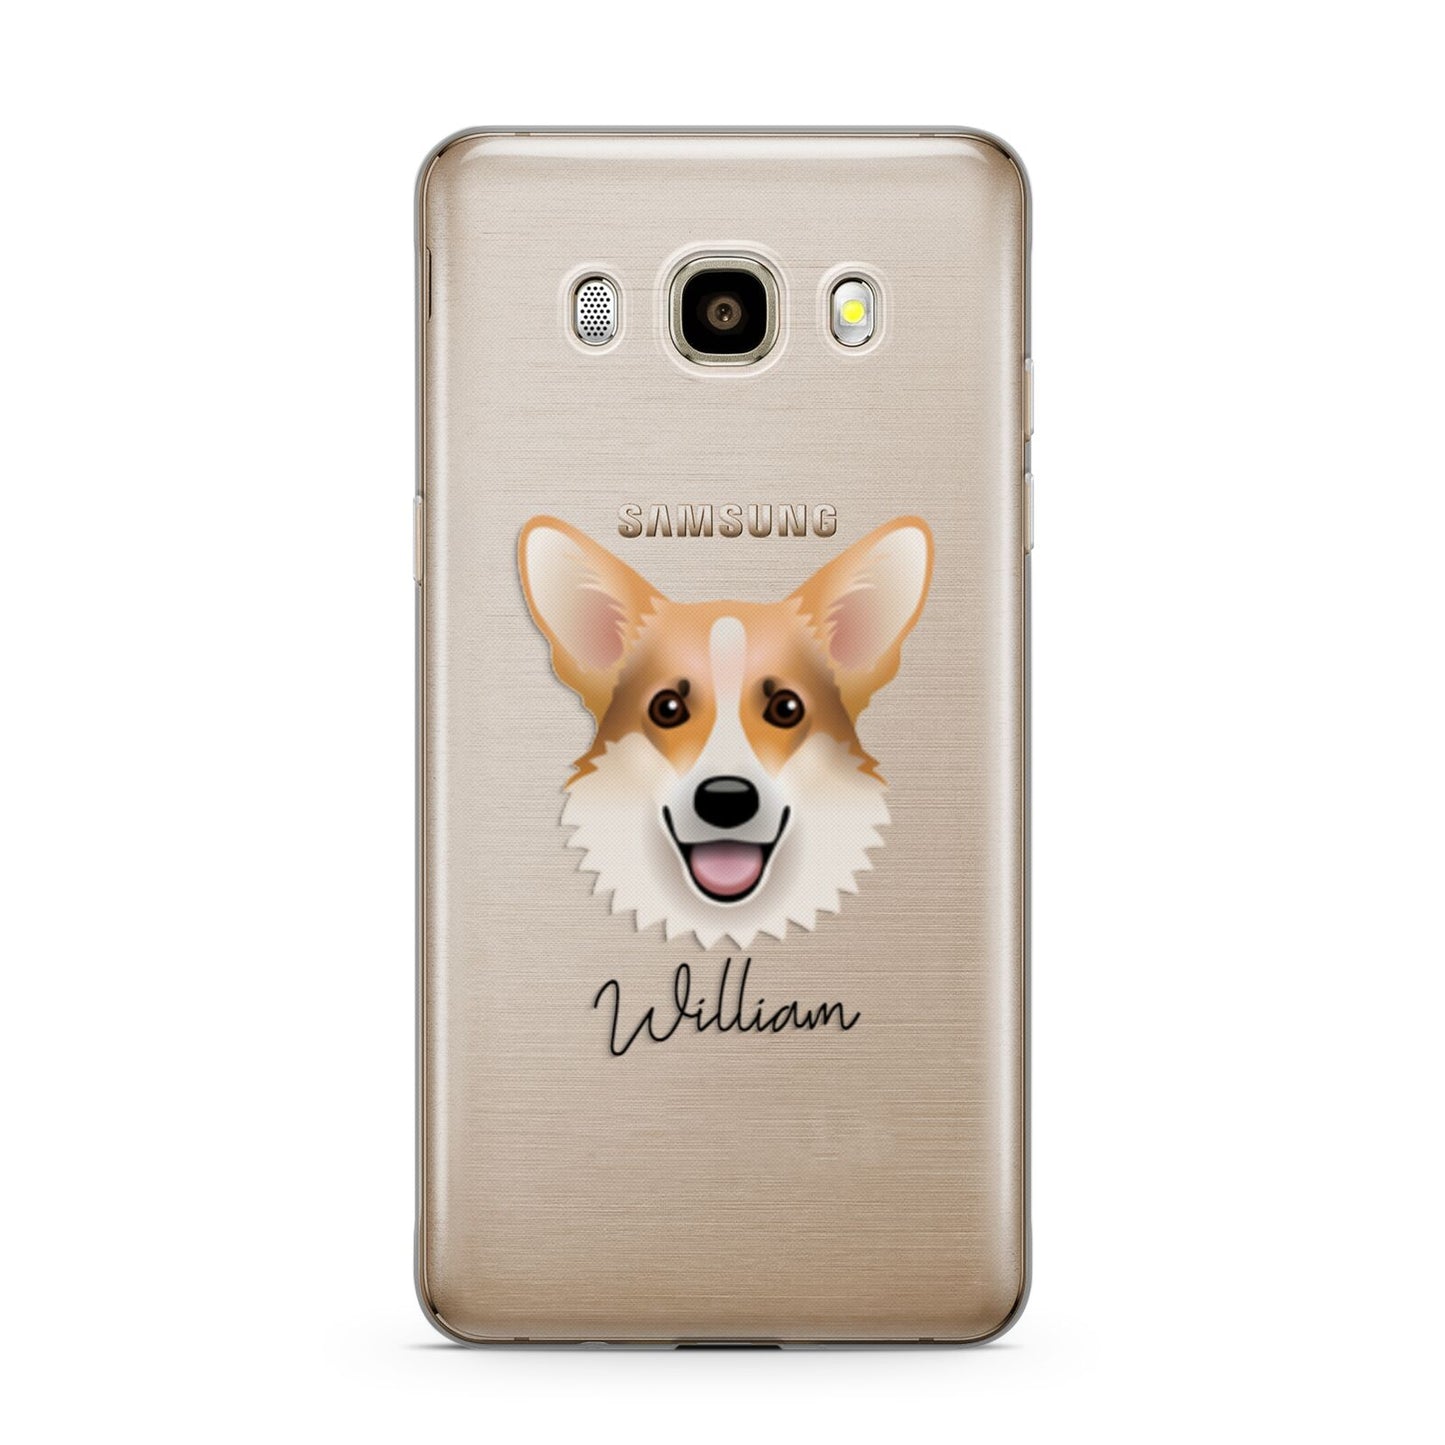 Corgi Personalised Samsung Galaxy J7 2016 Case on gold phone